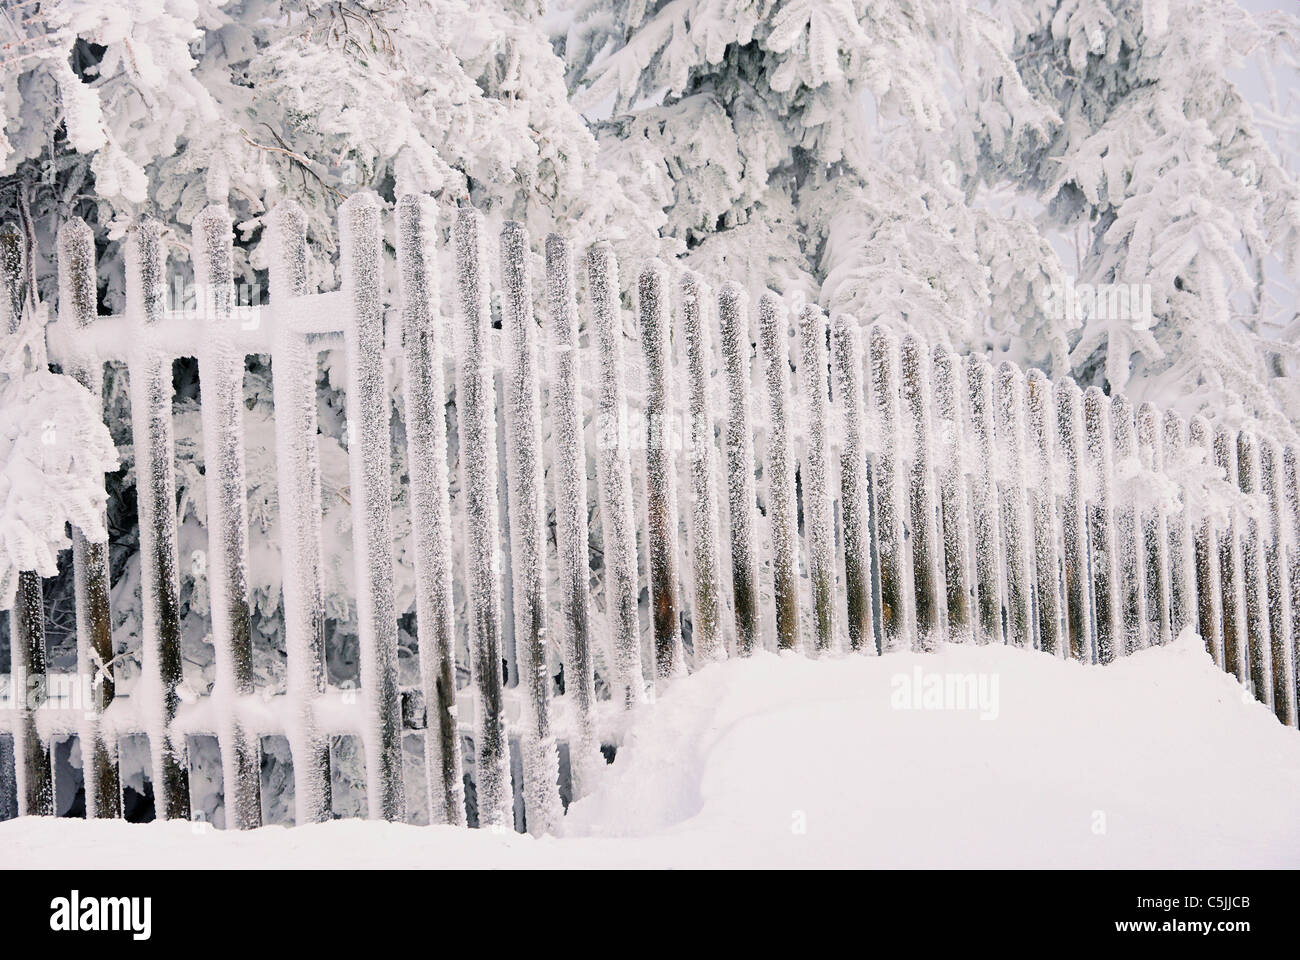 Zaun im Winter - fence in winter 02 Stock Photo